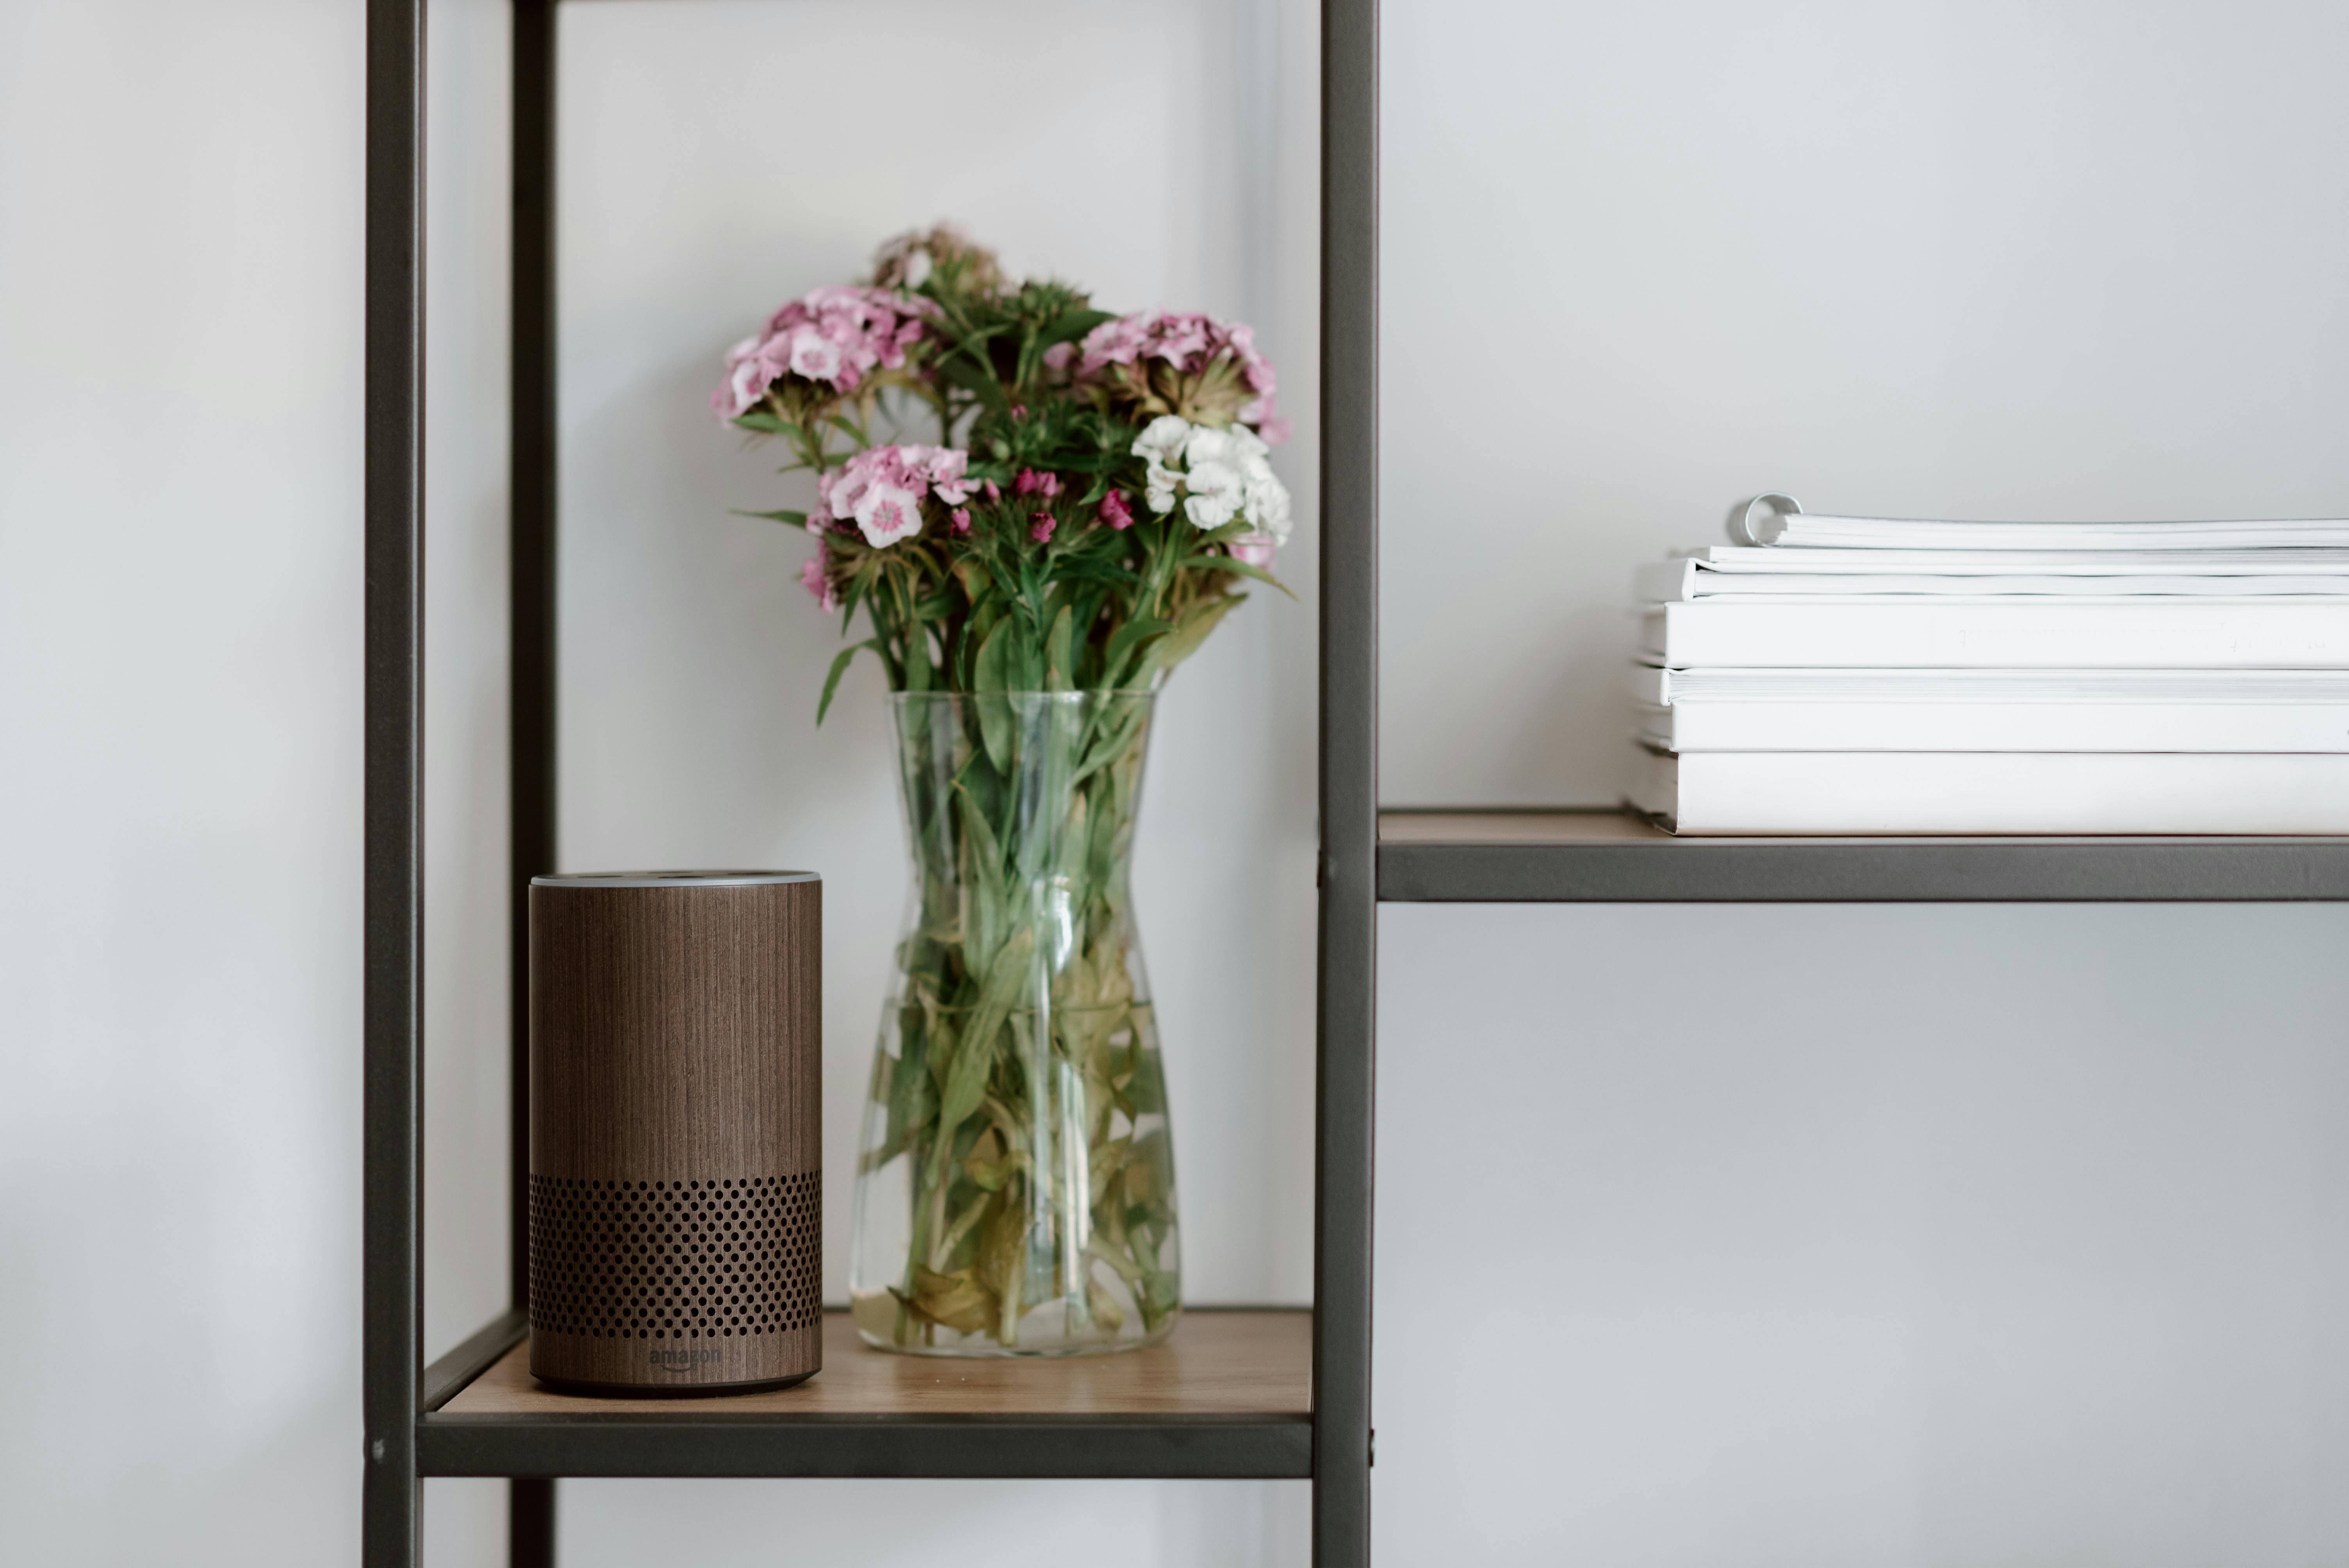 Home Automation And Alexa: Integrating Amazon Alexa Into Your Smart Home. Introduction to Amazon Alexa